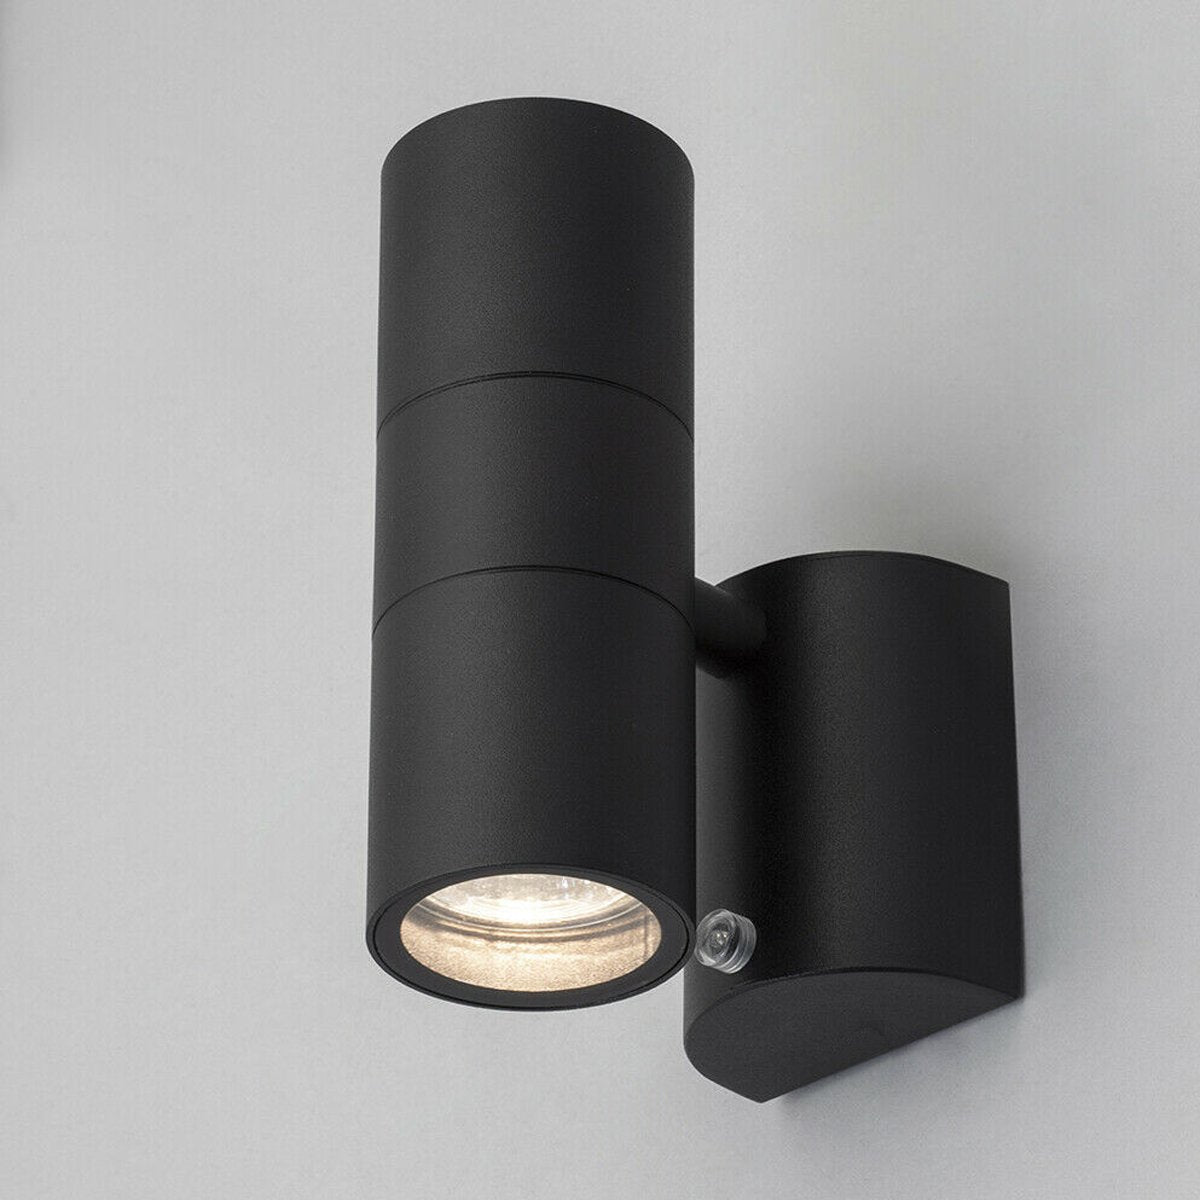 SHARON - CGC Black Dual Outdoor Wall Spotlight With Photocell Sensor